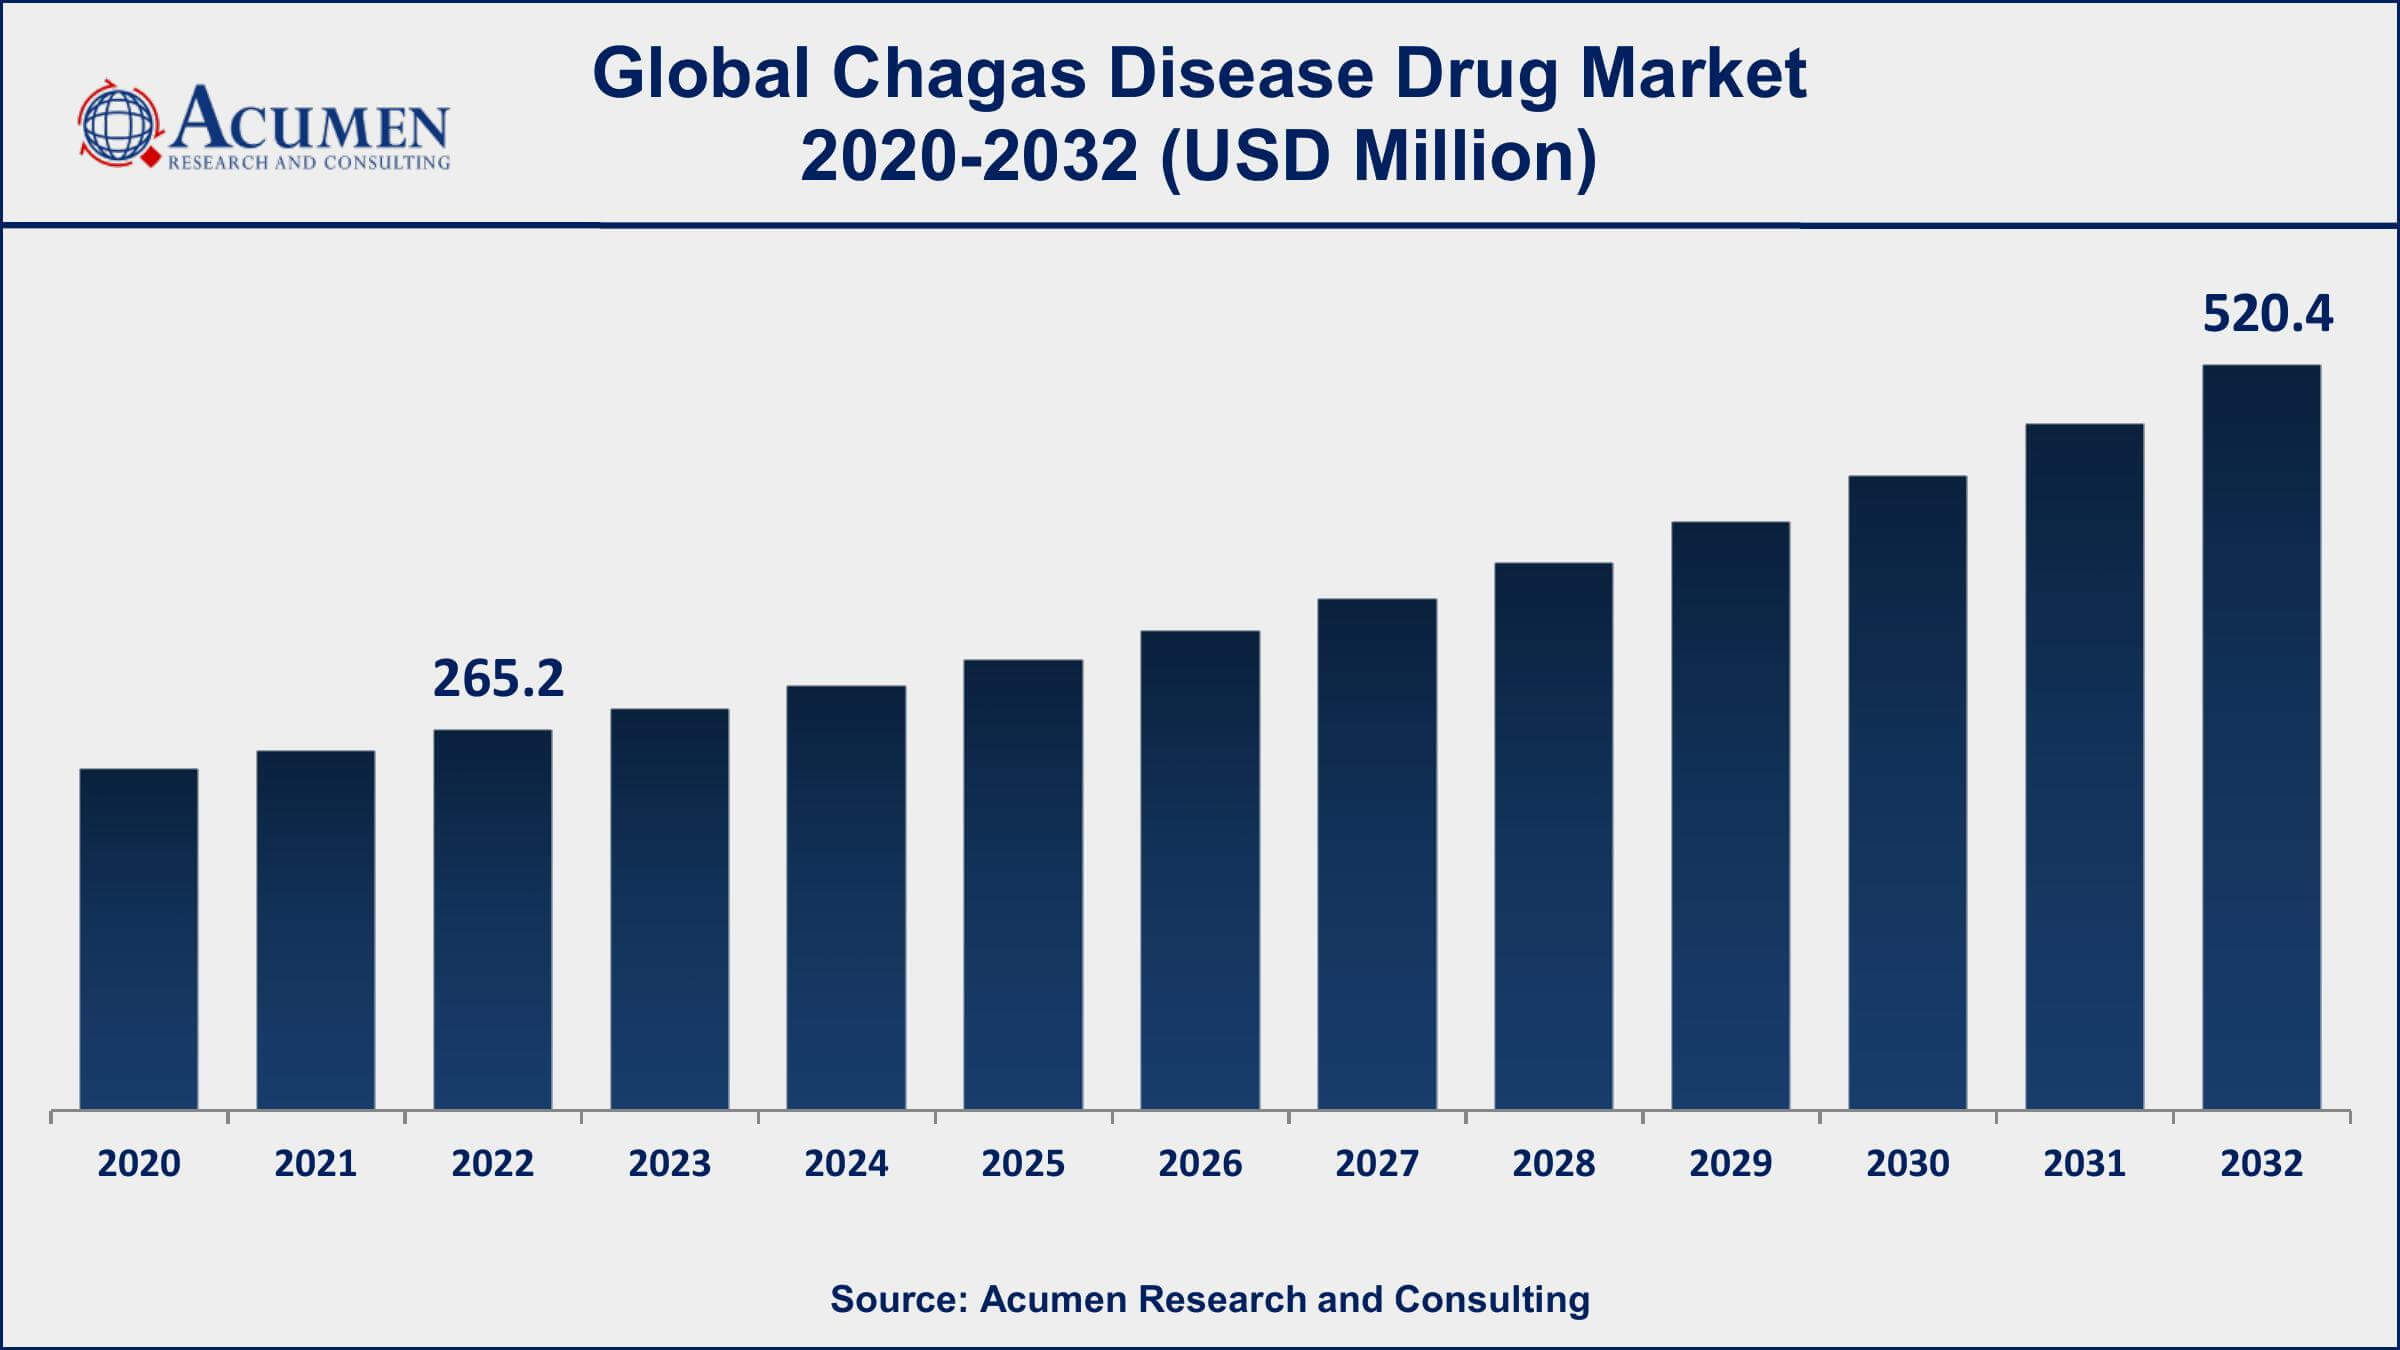 Chagas Disease Drug Market Dynamics